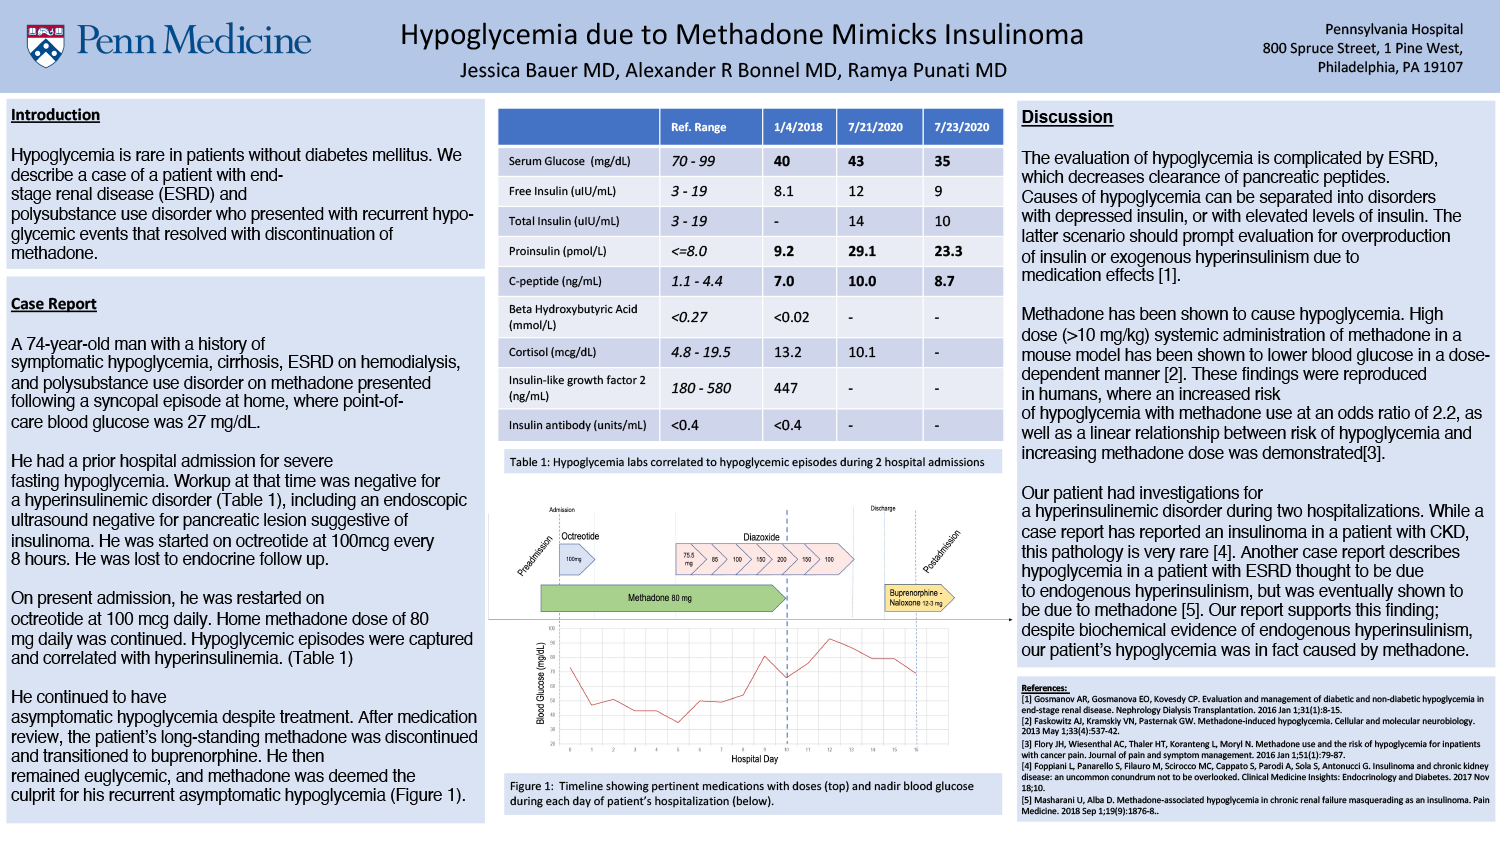 Jessica Bauer - PAS-49-Hypoglycemia-due-to-Methadone-Mimicks-Insulinoma